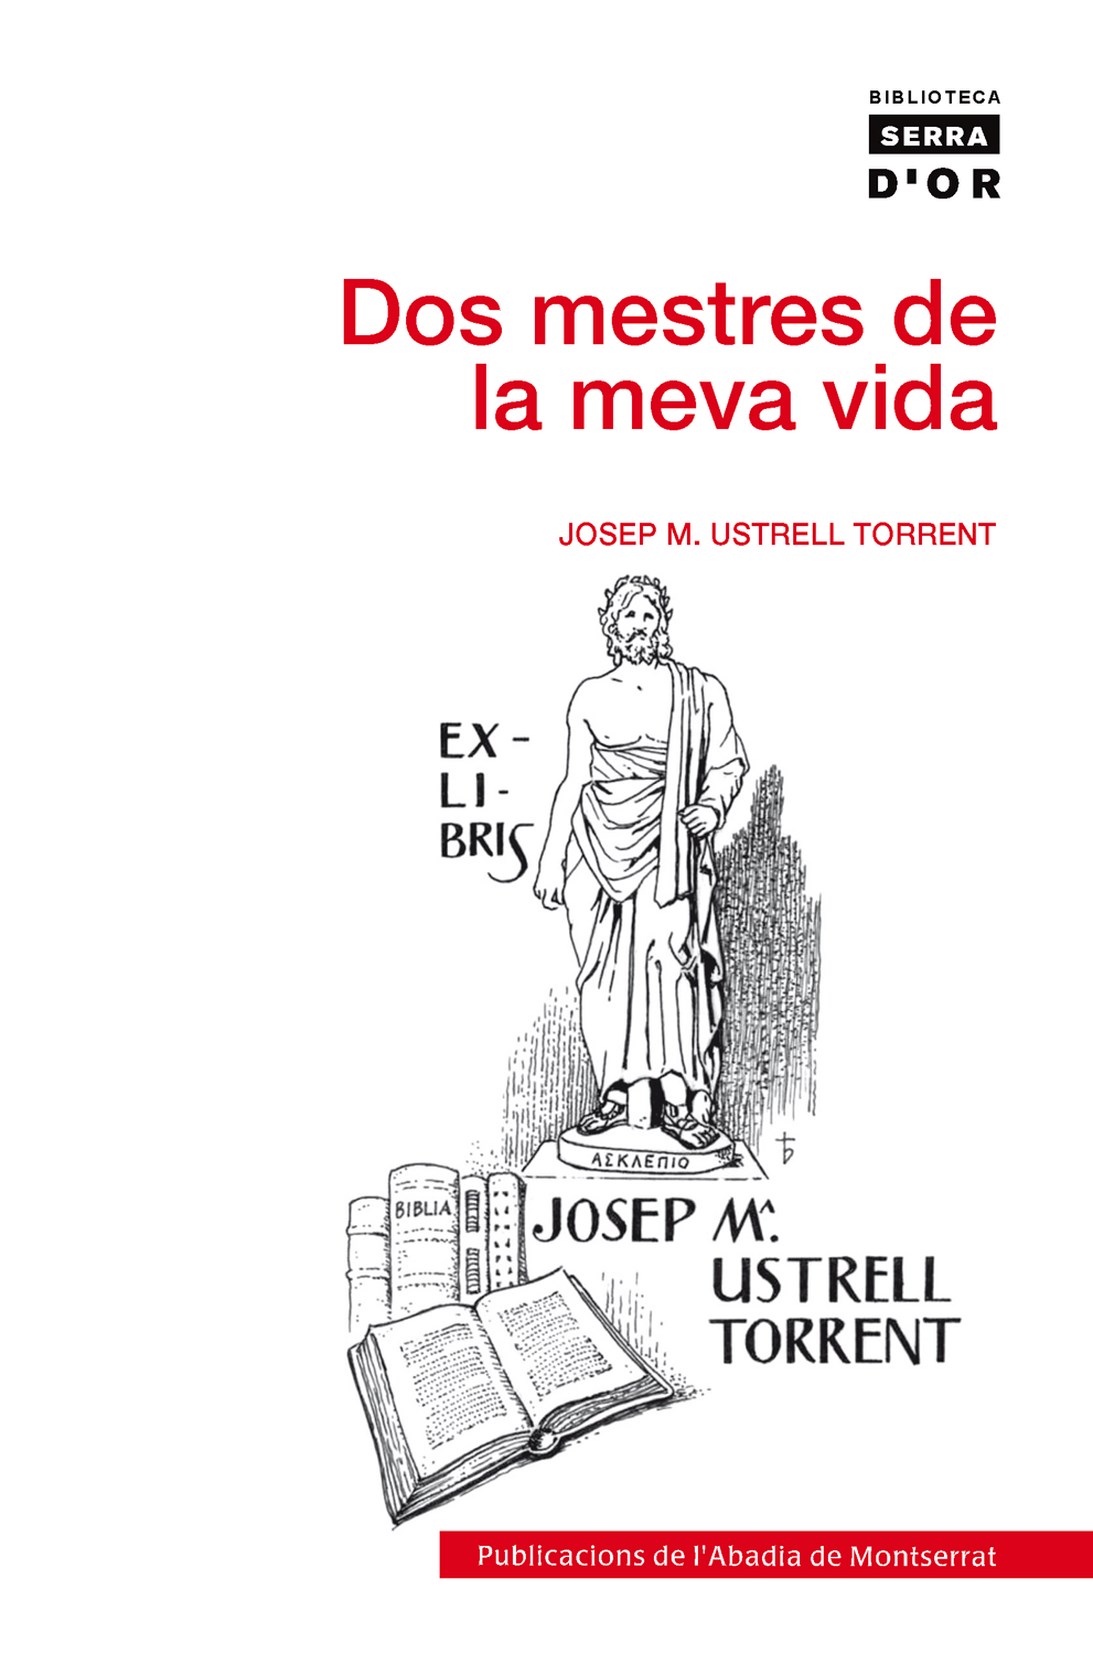 Josep M. Ustrell Torrent